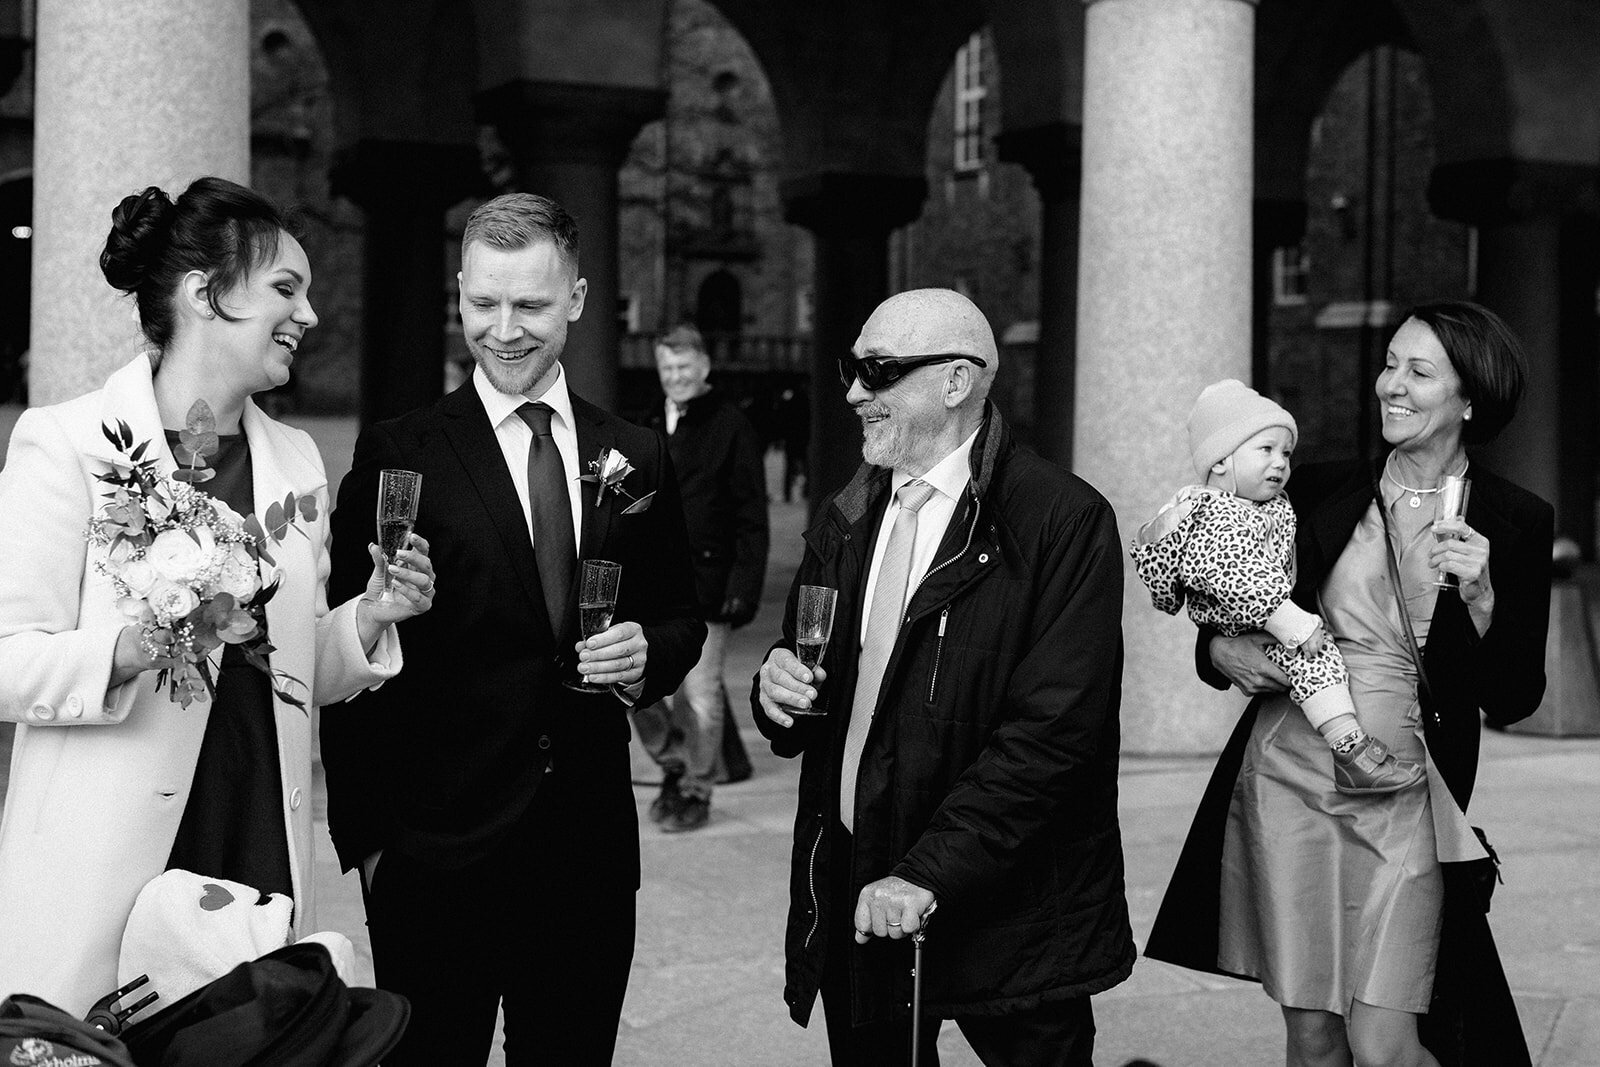 stockholm-city-hall-wedding-documentary-melissa-habegger-050.jpg